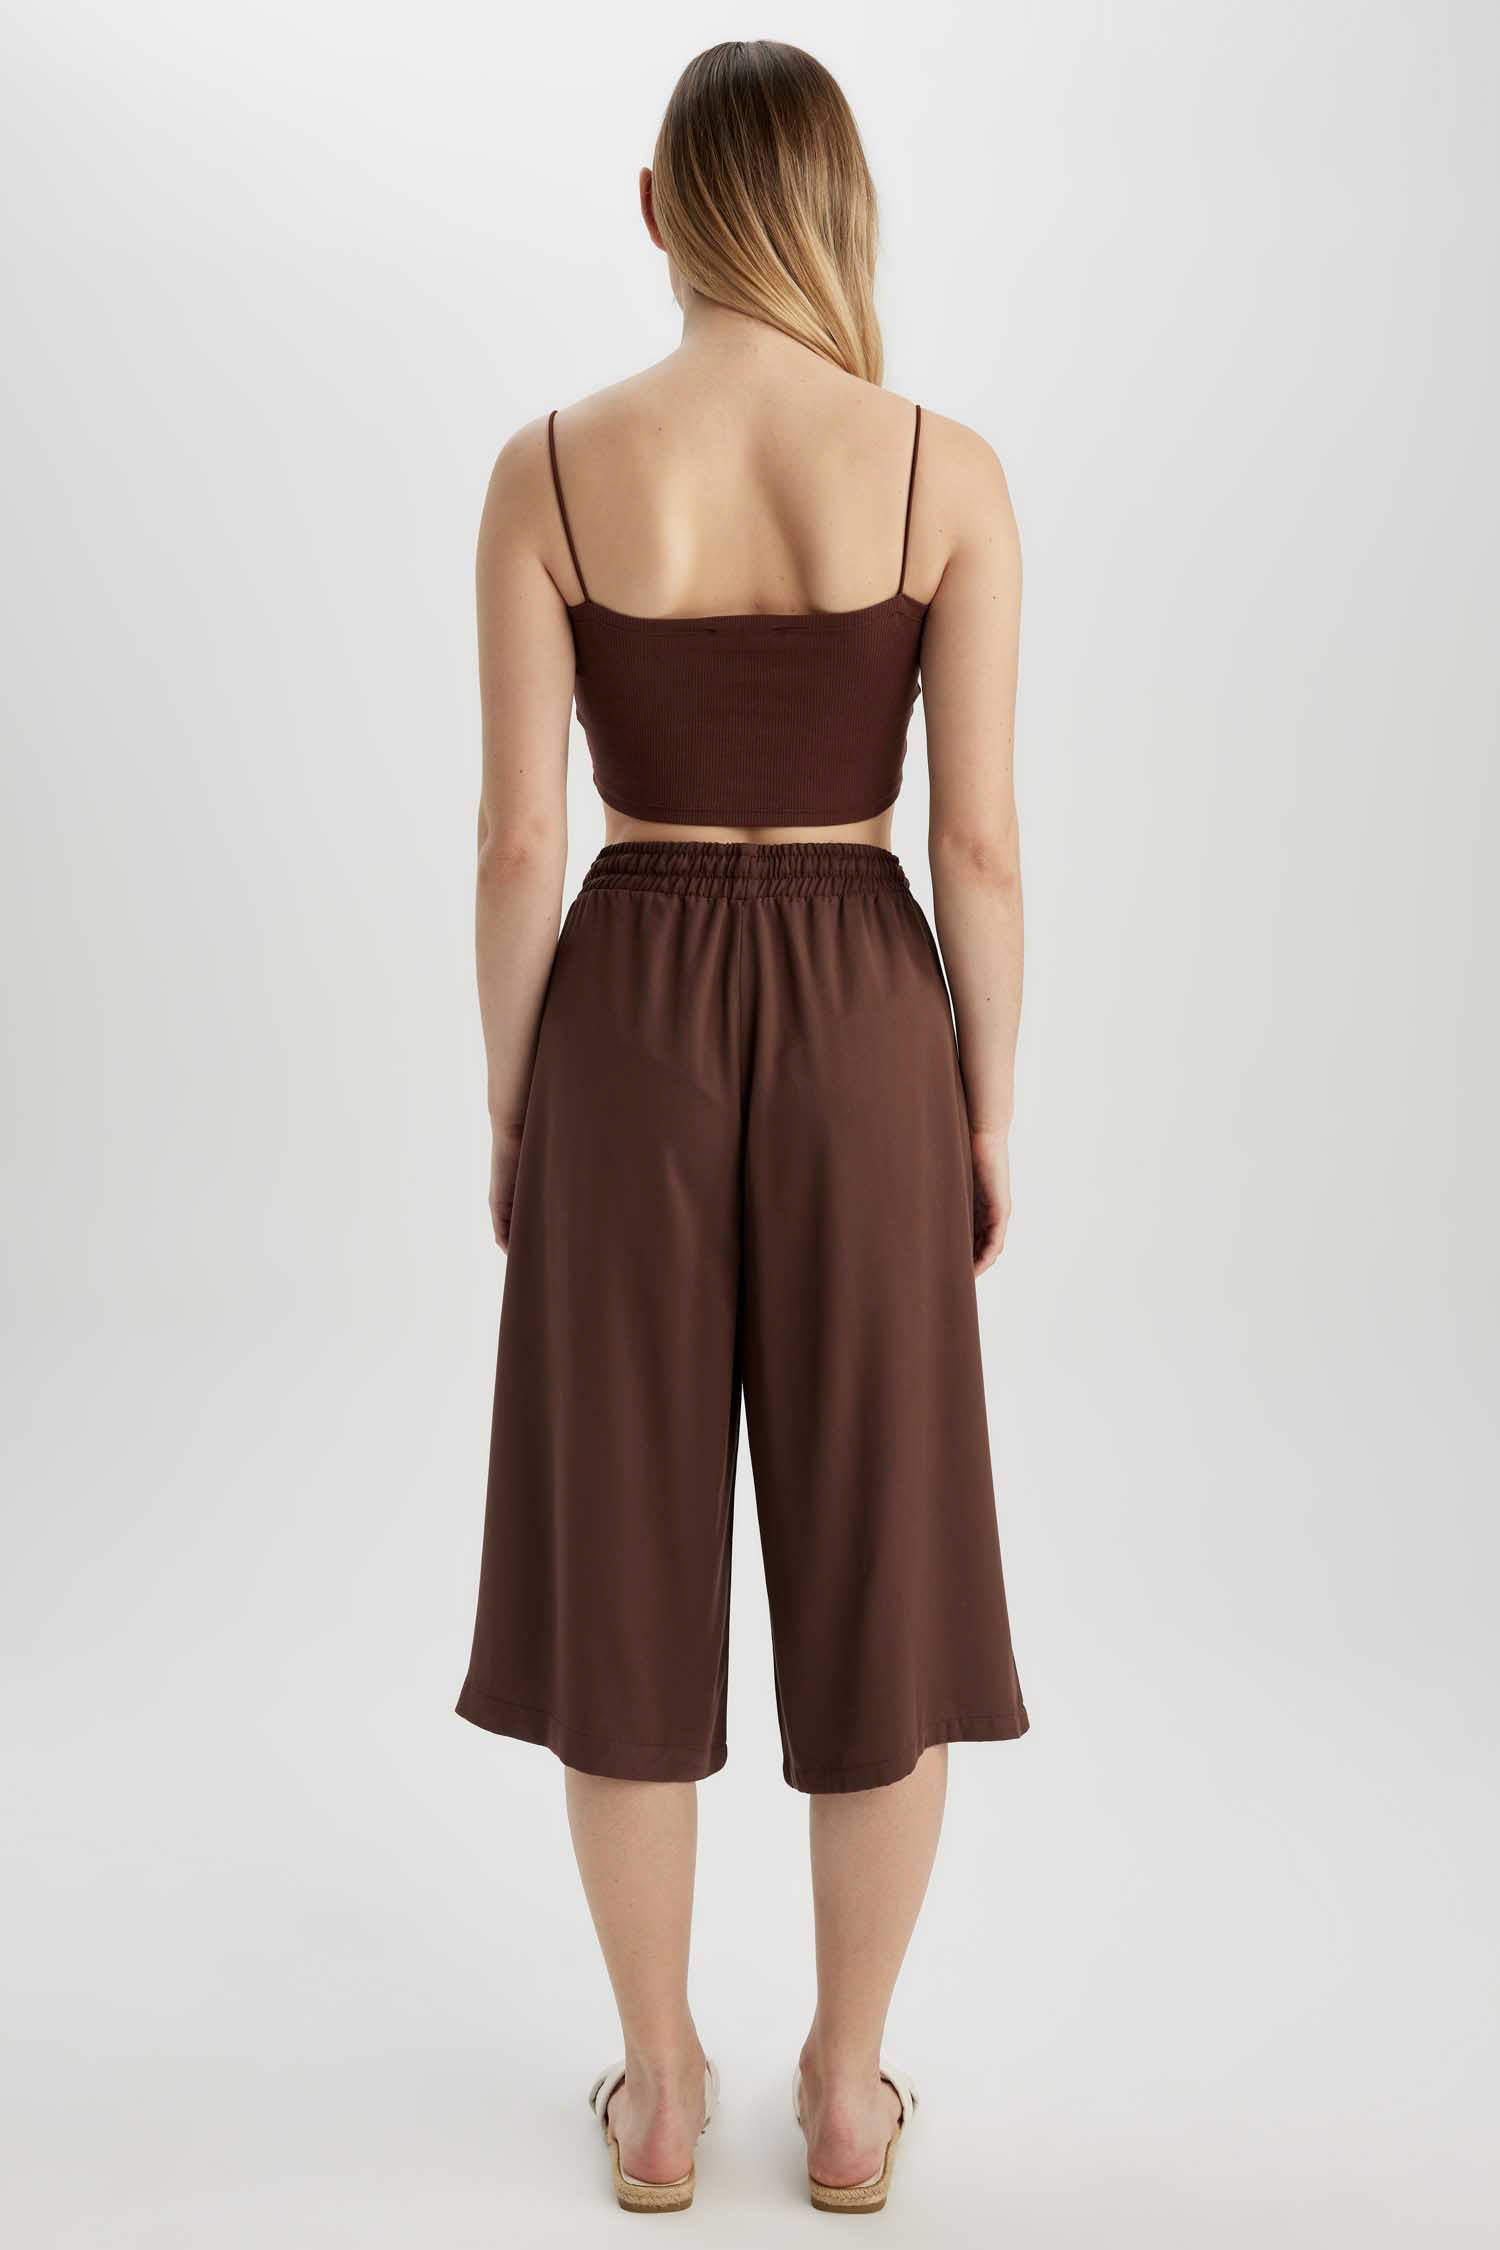 Paz Torras shop online | Light brown capri palazzo trousers with belt